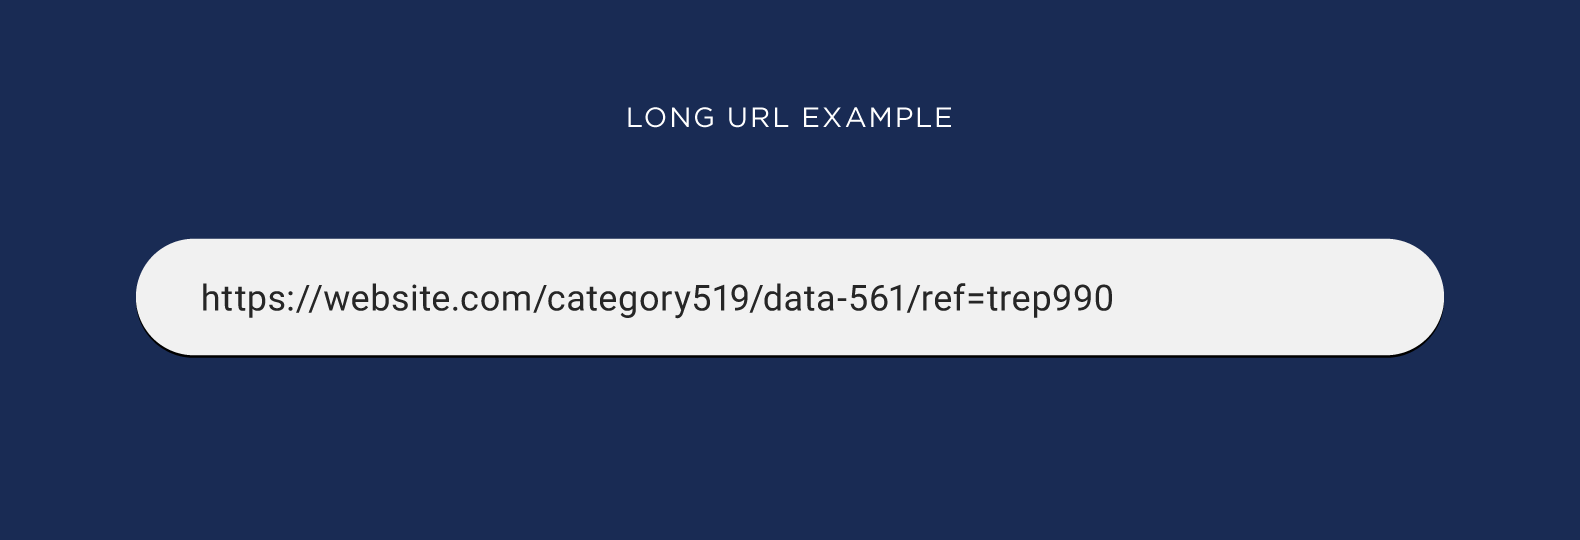 Long URL example